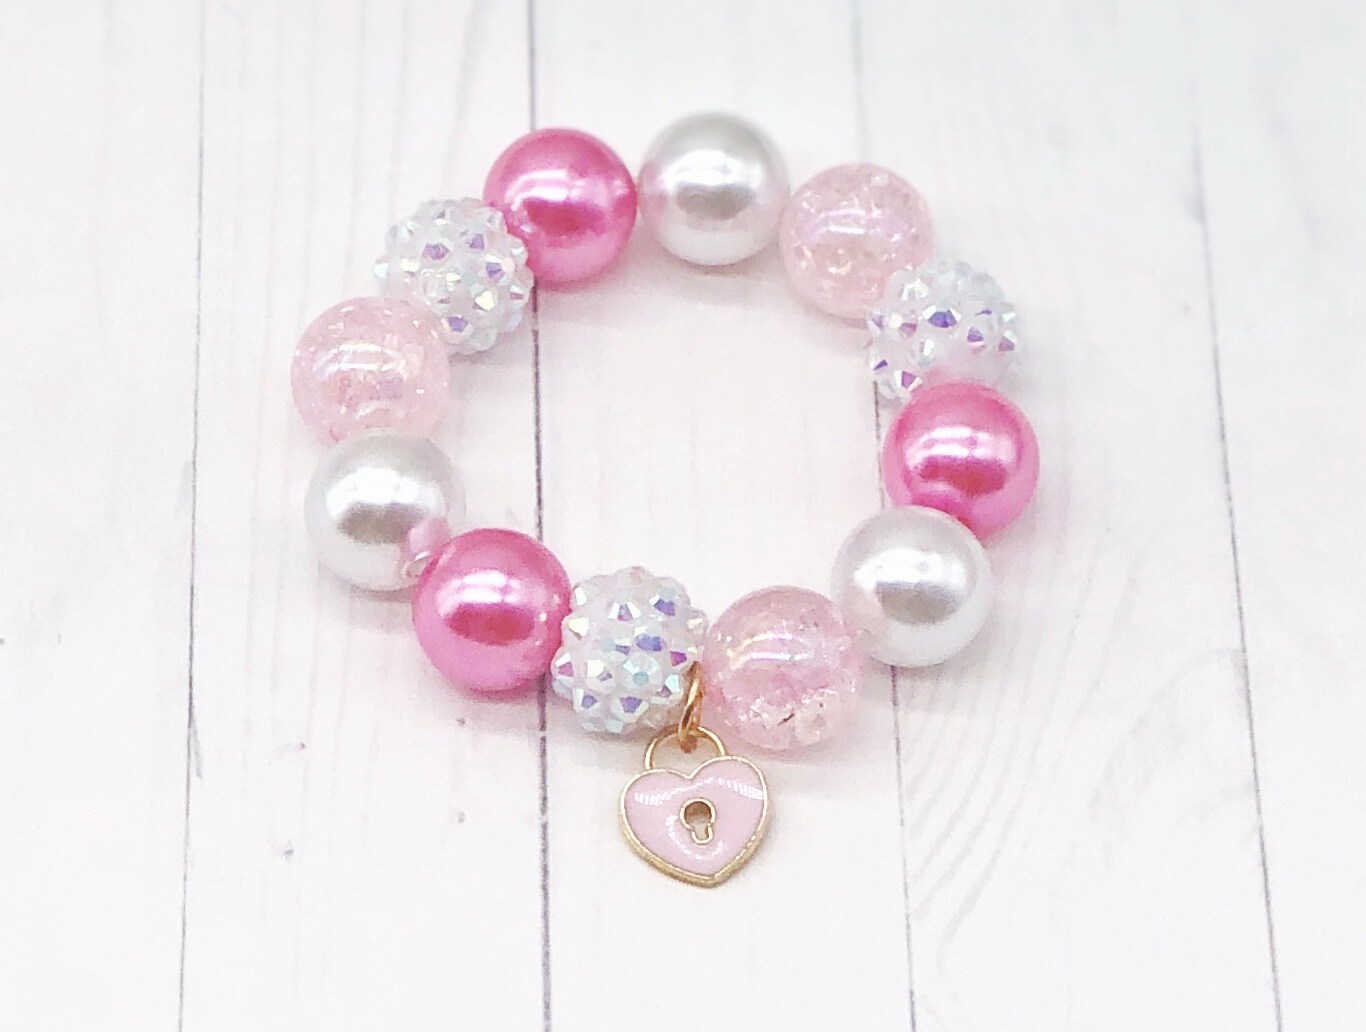 Amazon.com: PinkSheep Beads Bracelets for Kids, Girls Friendship Charm  Bracelet, Crystal Beads, 10 PC, Party Favor : Toys & Games